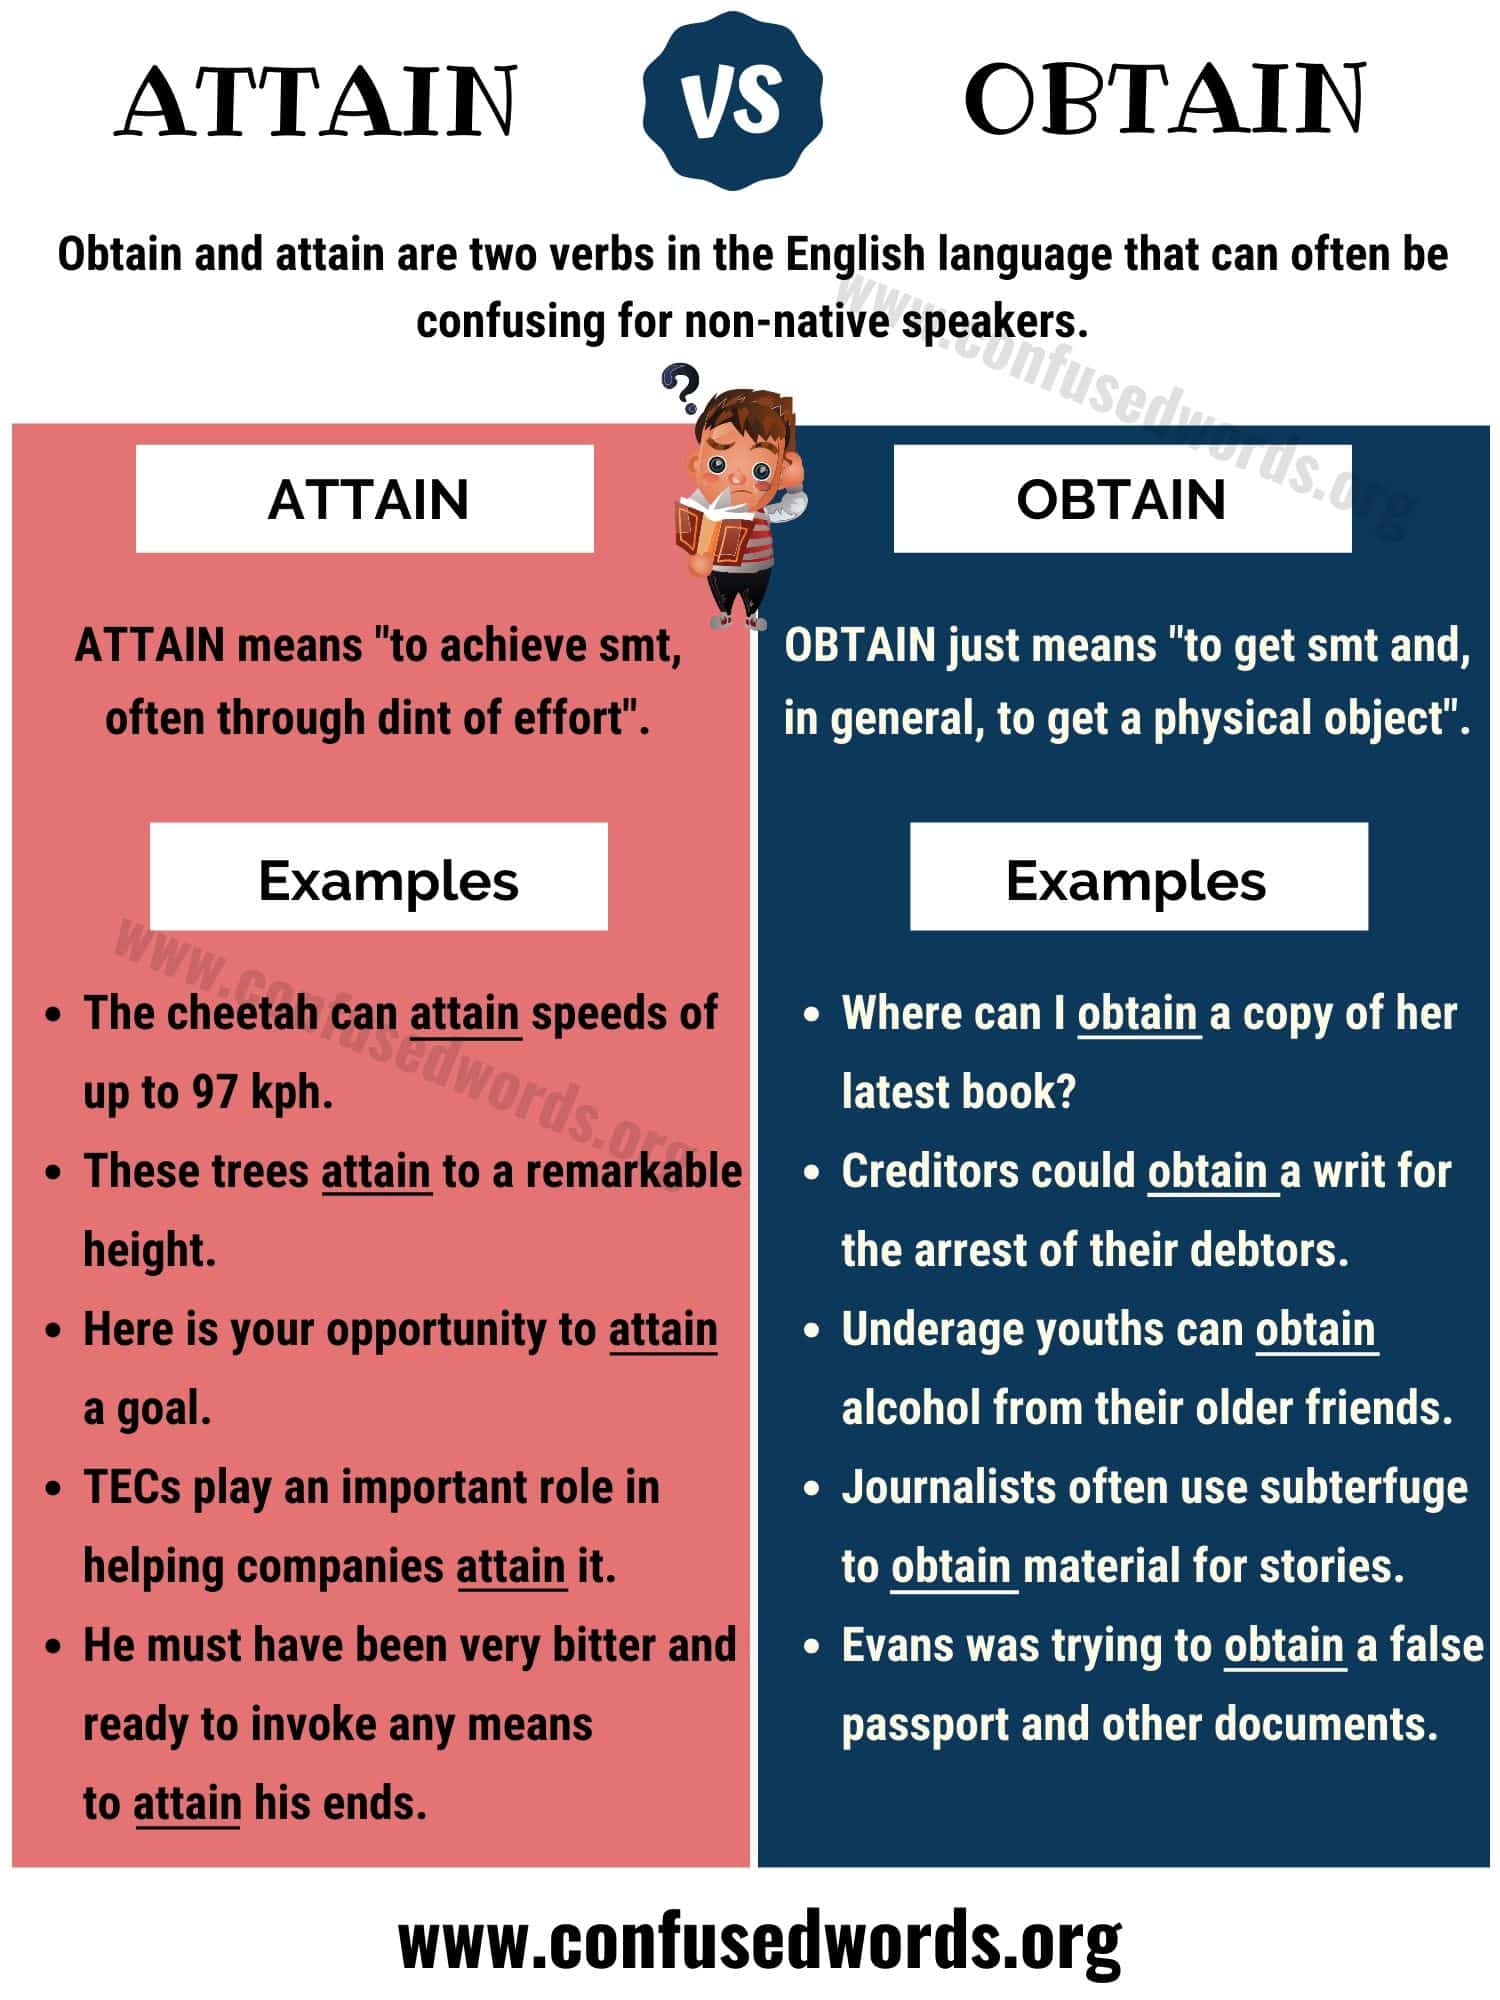 Attain vs Obtain